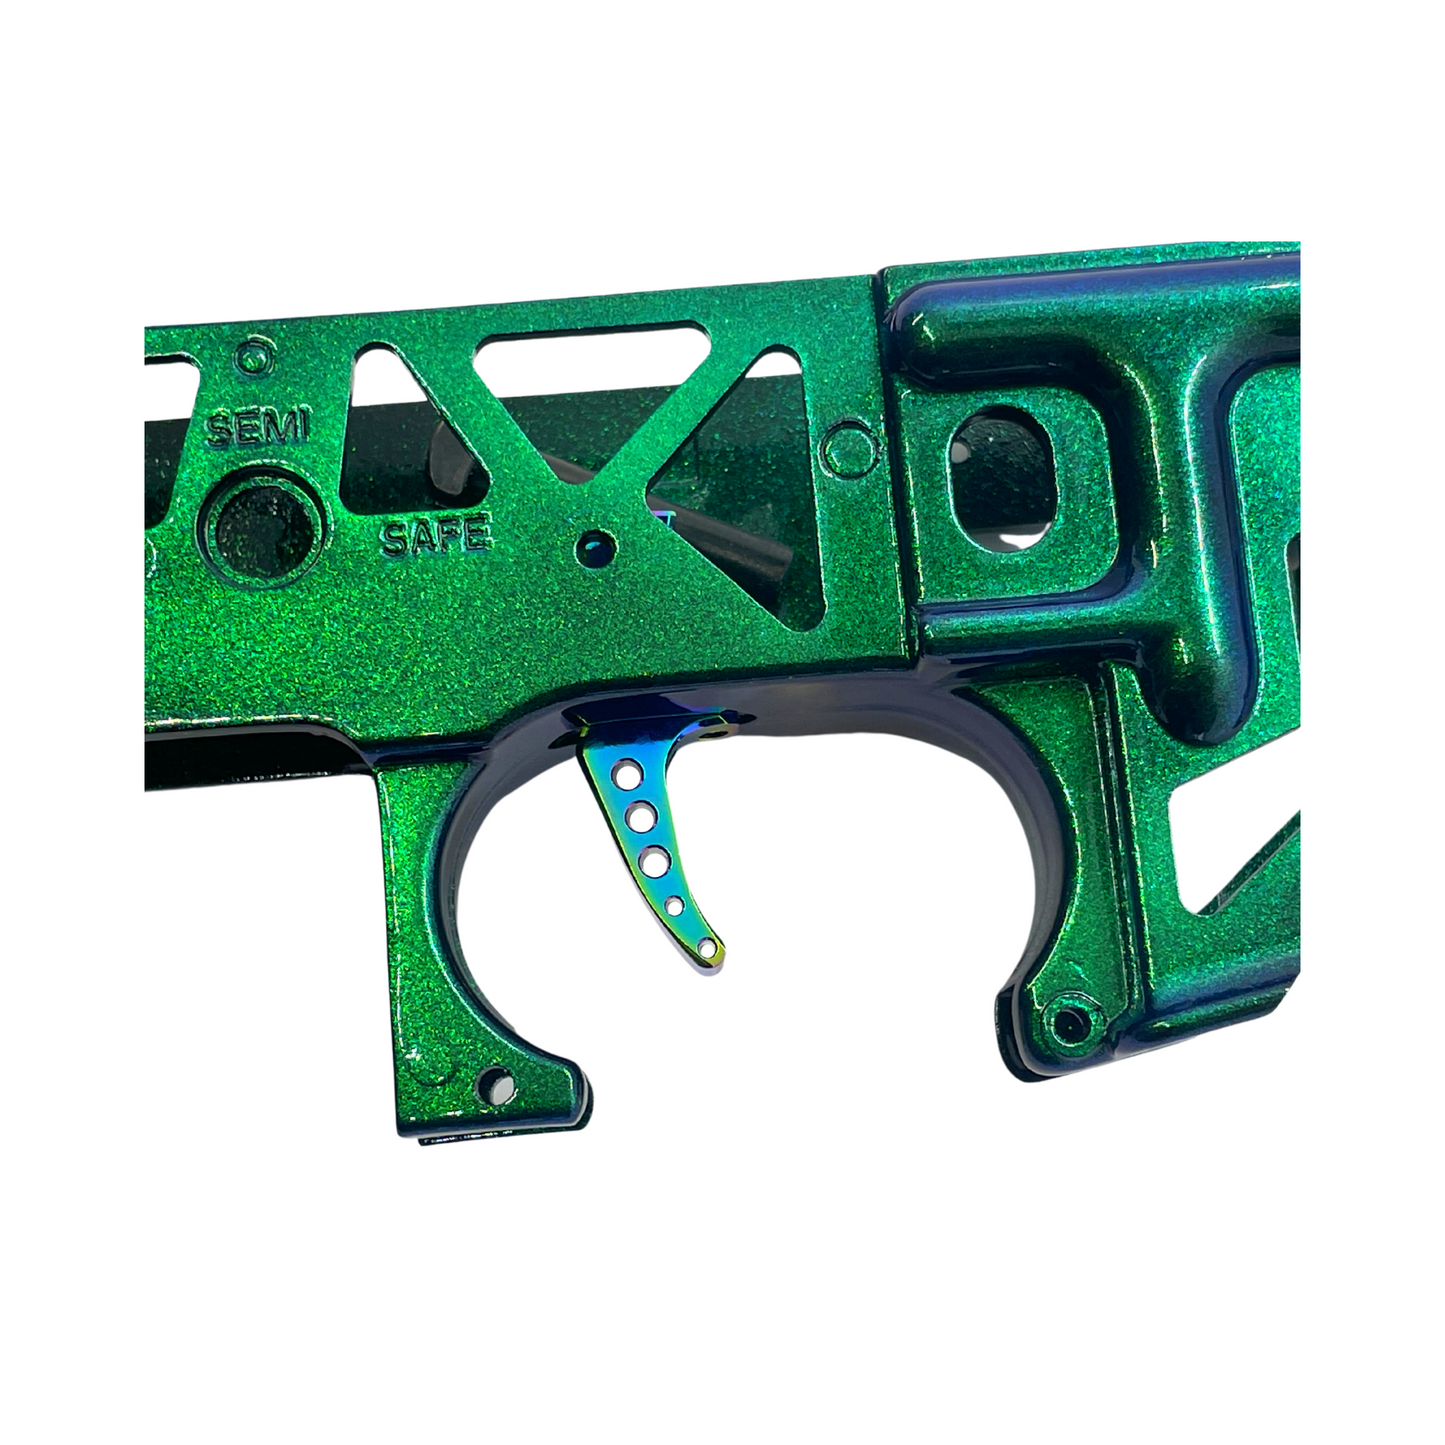 GBU Custom Series "NANO" Adjustable HPA/ Mosfet CNC Trigger